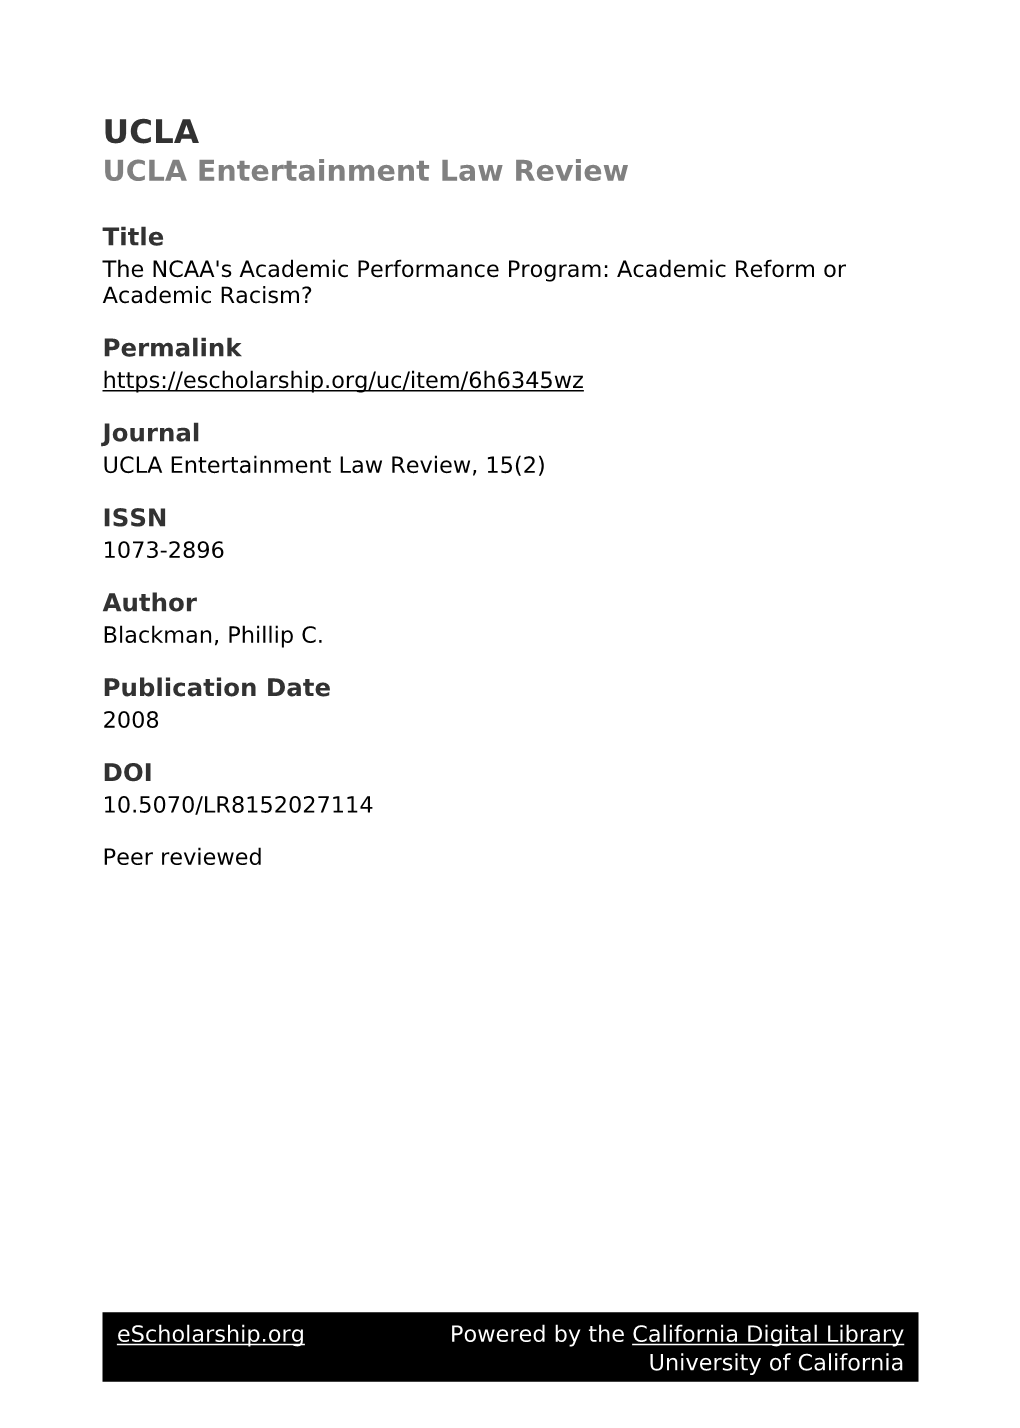 NCAA's Academic Performance Program: Academic Reform Or Academic Racism?